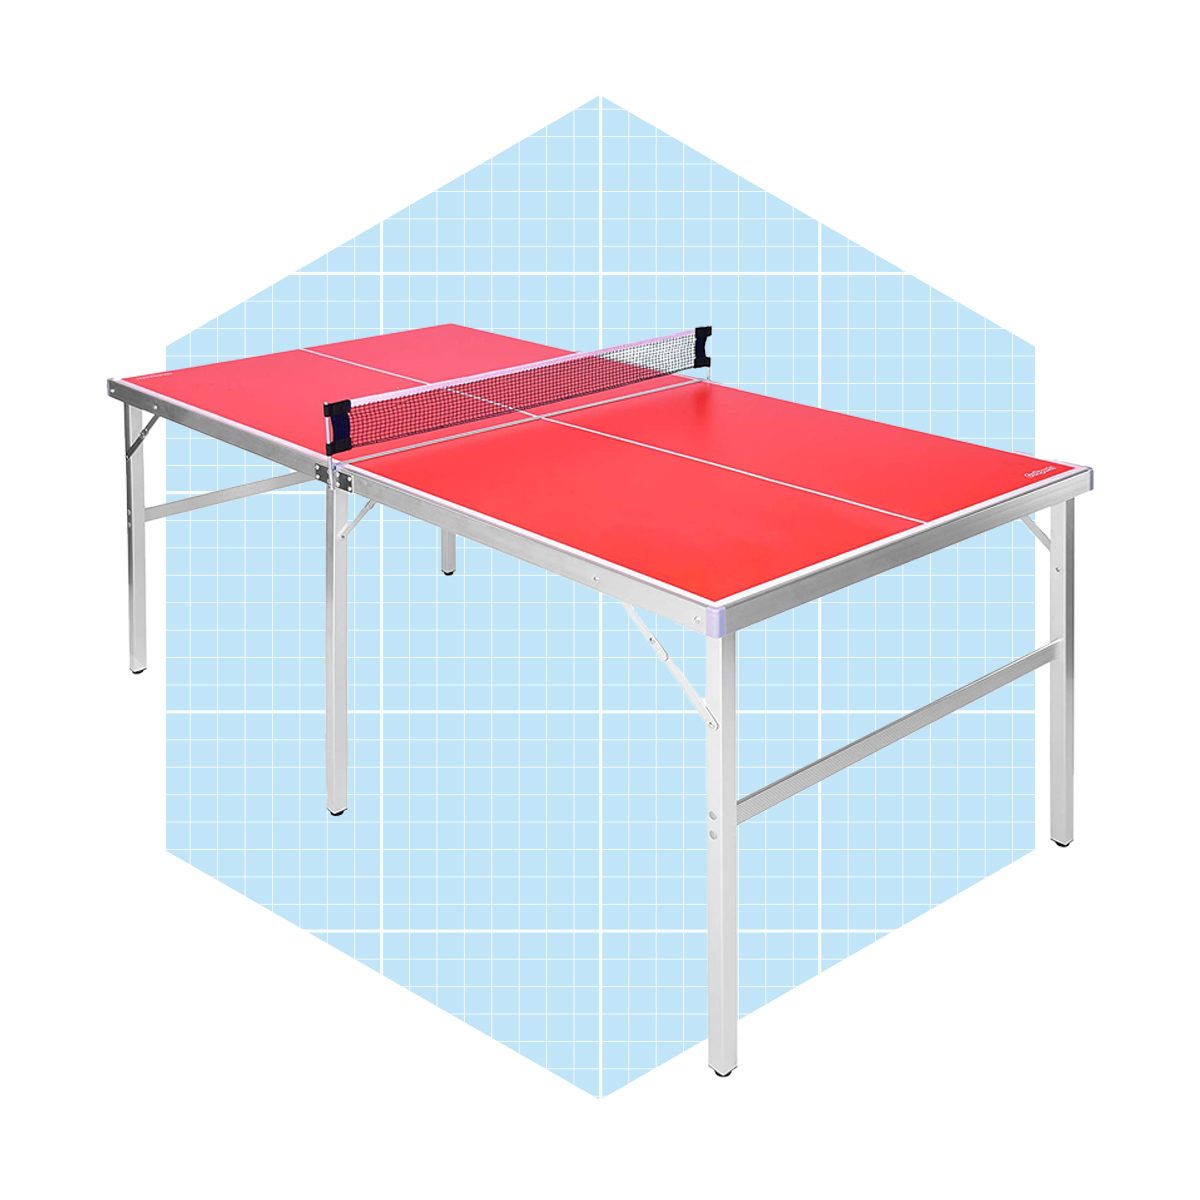 Midsize Portable Ping Pong Table